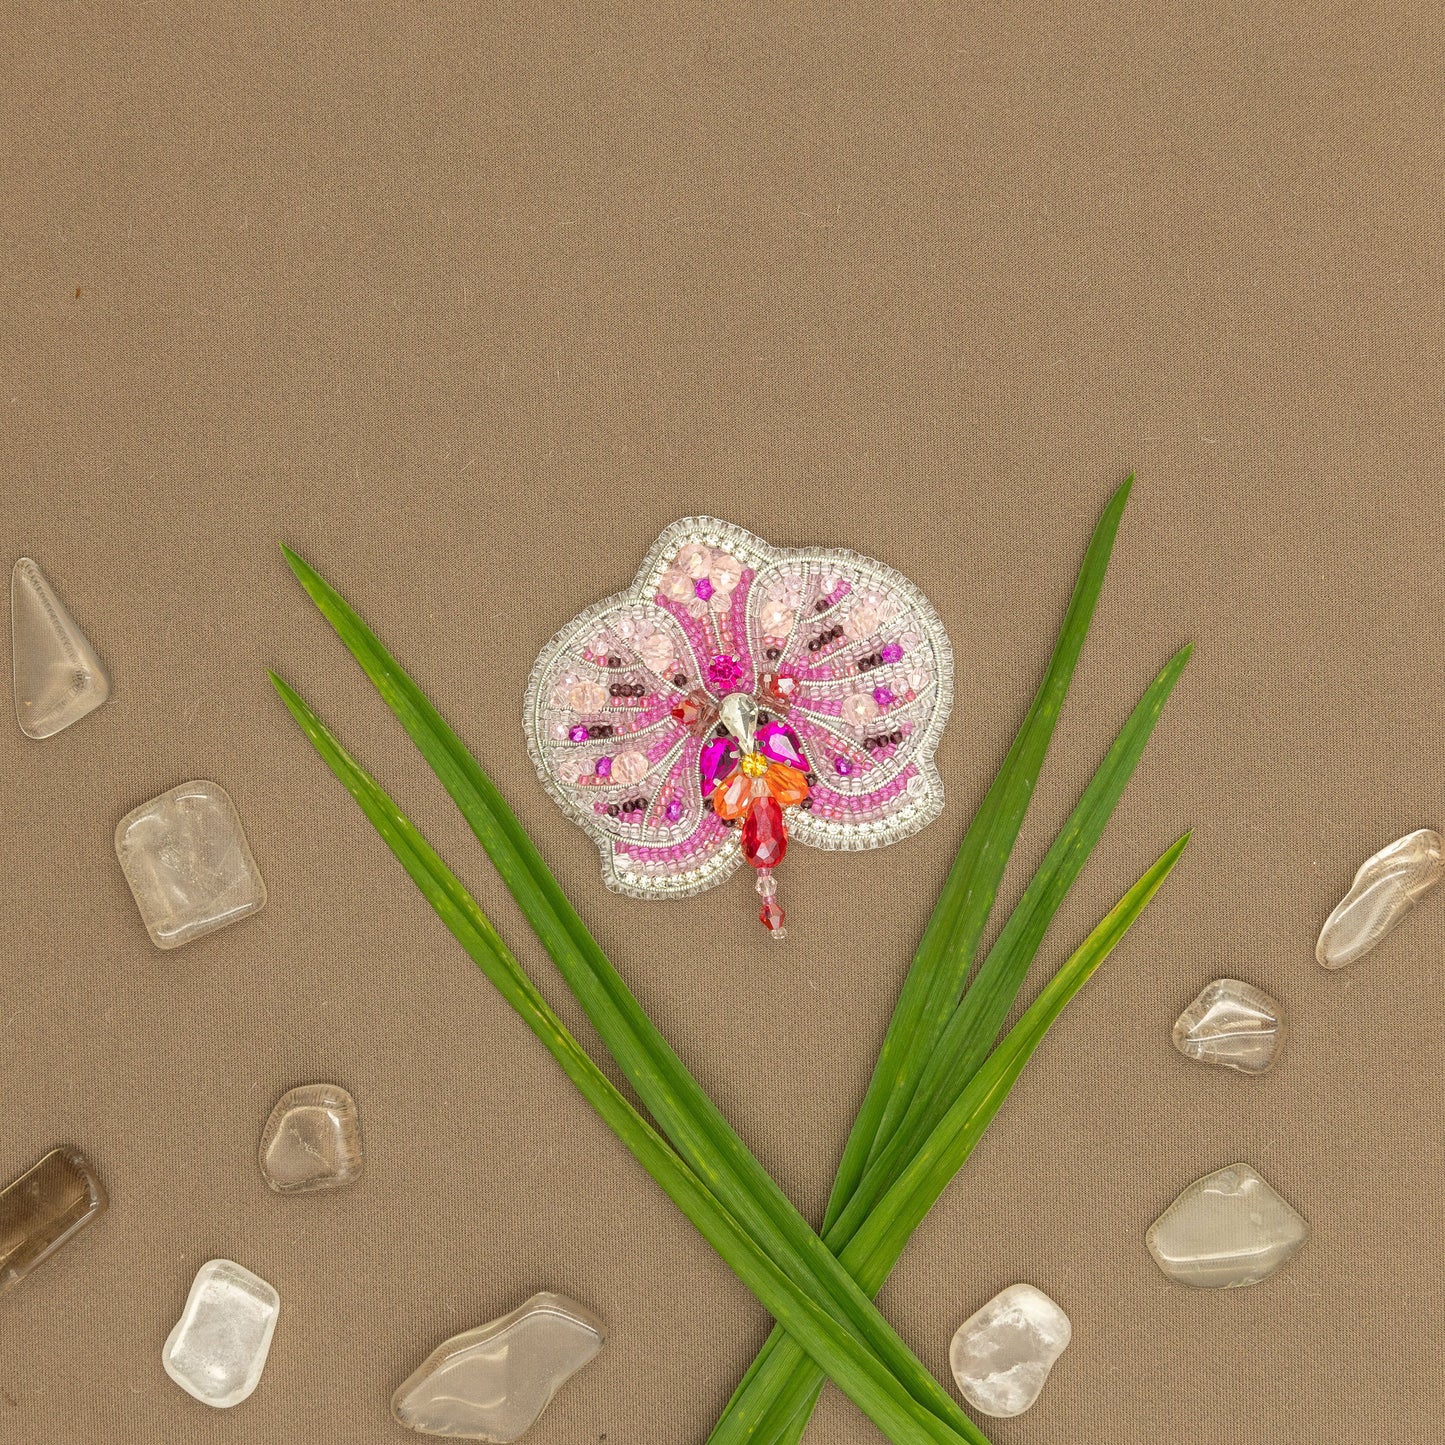 Orchid Flower Bead embroidery kit. Seed Bead Brooch kit. DIY Craft kit. Beading kit. Needlework beading. Handmade Jewelry Making Kit